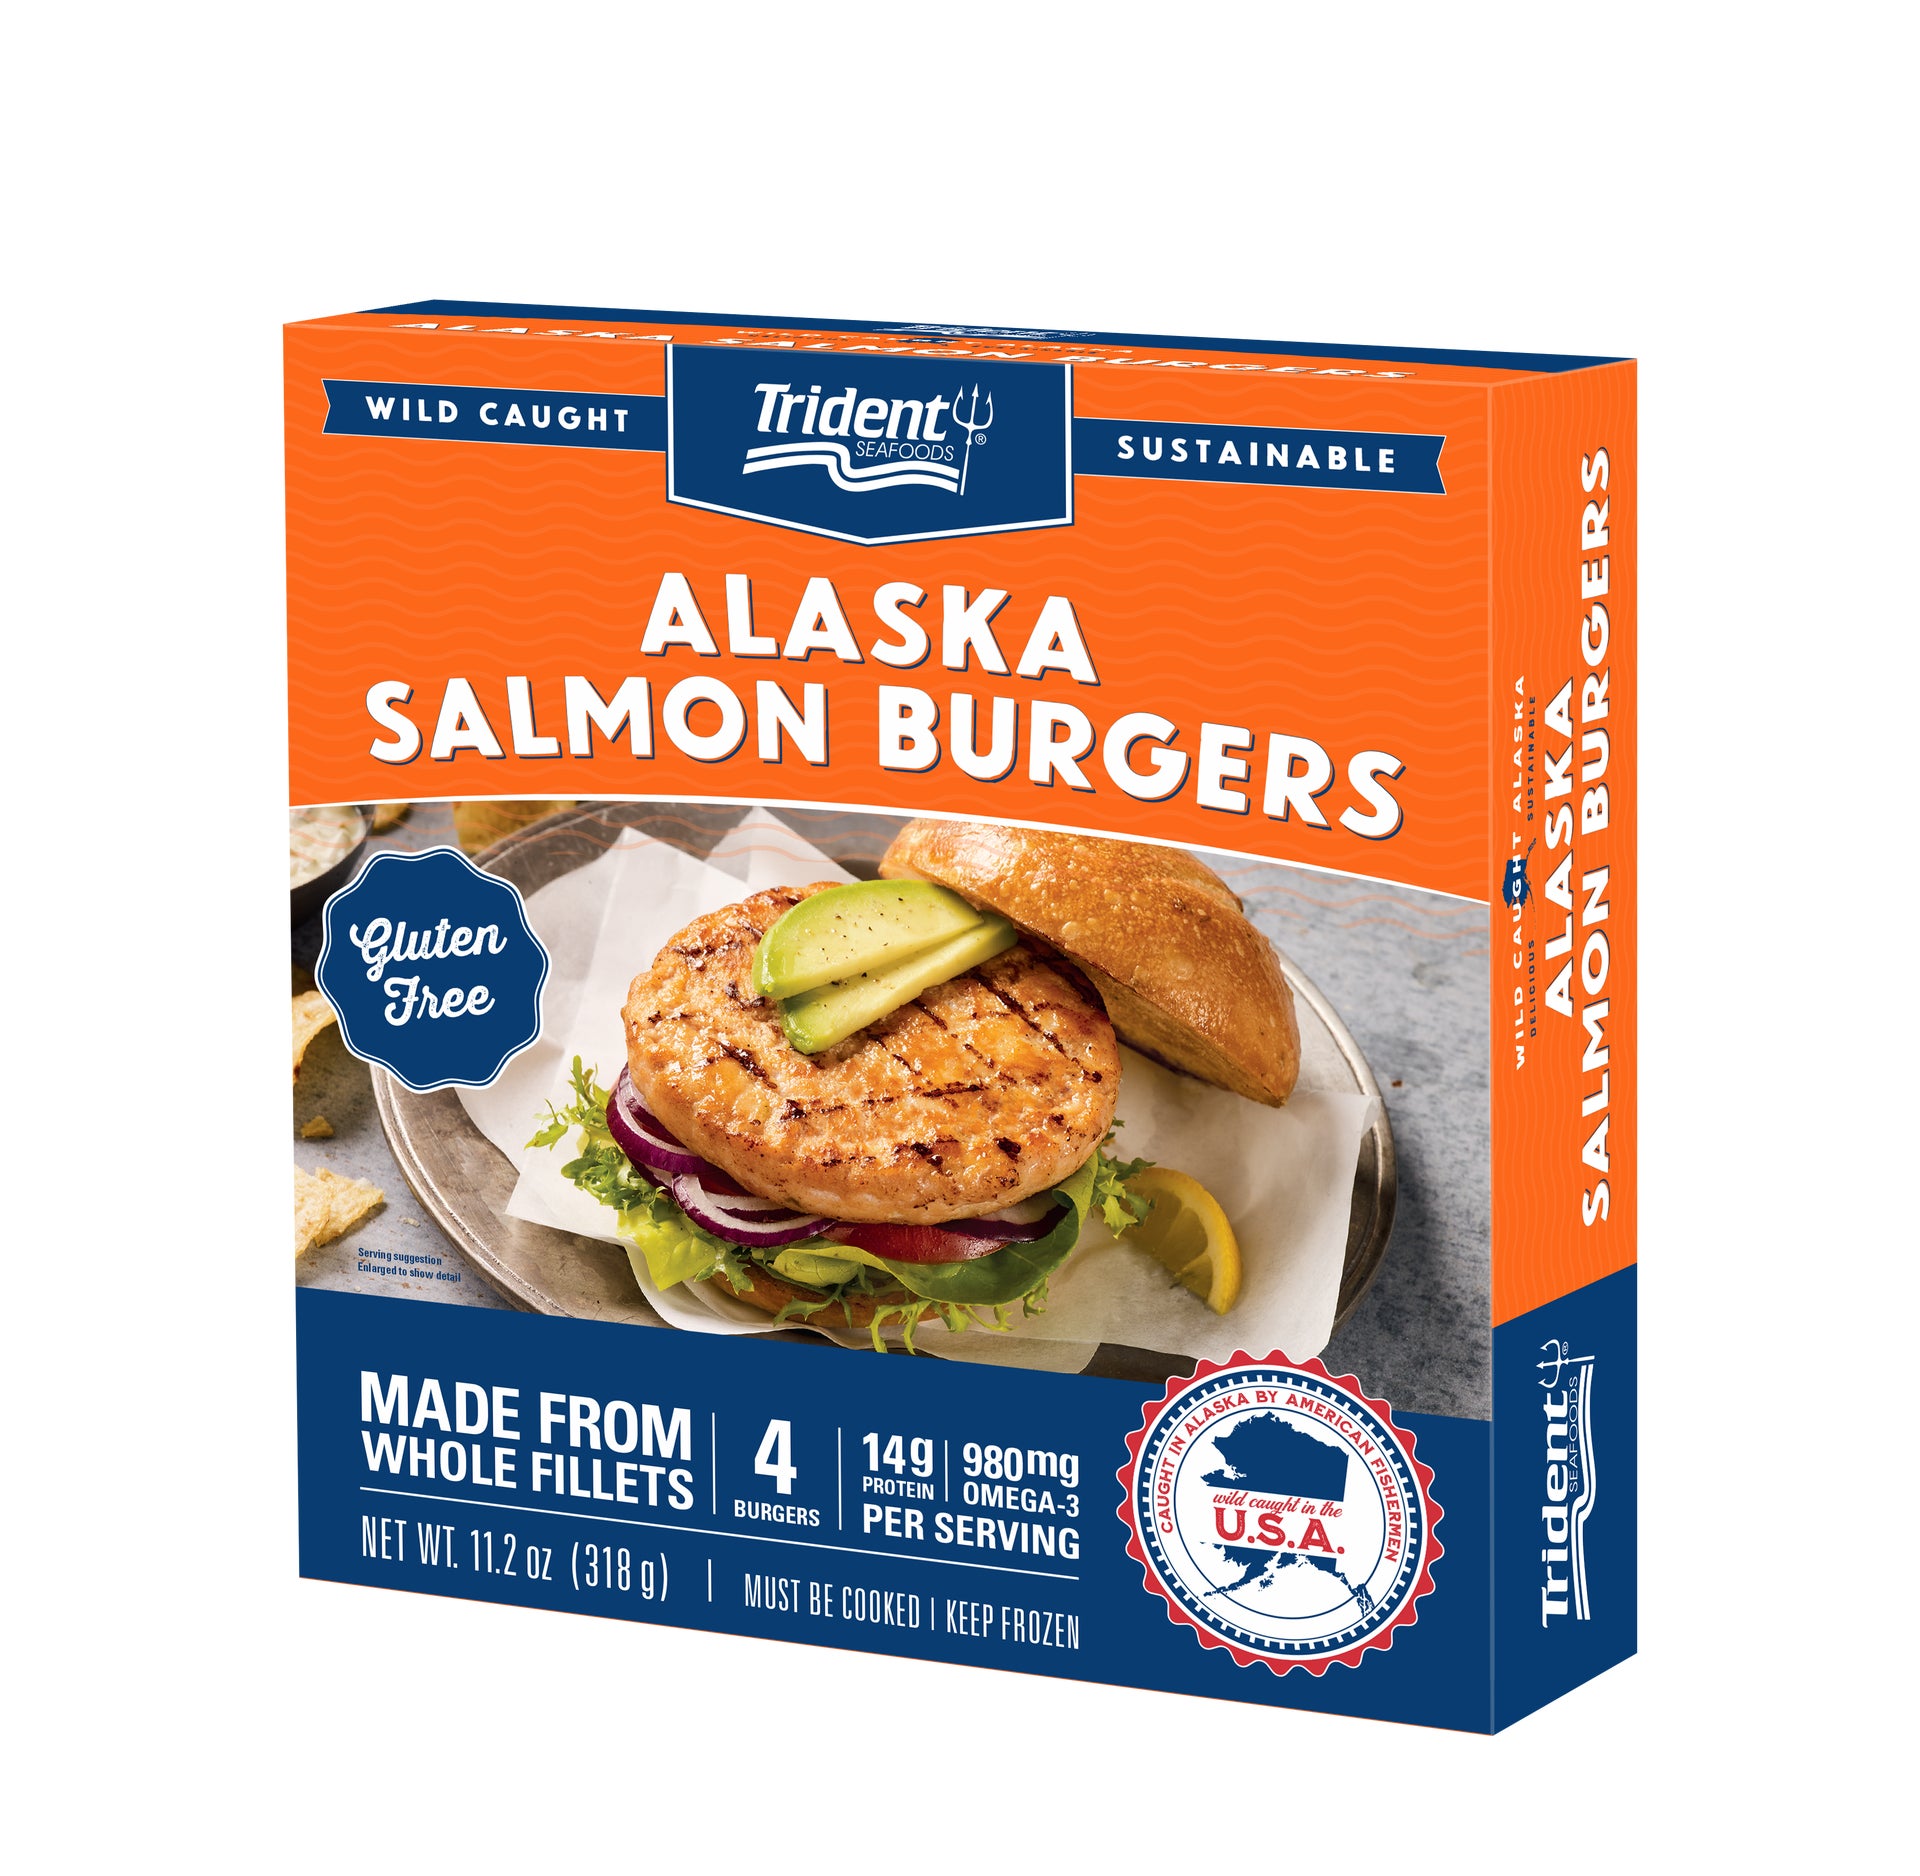 Alaska Salmon Burgers Packaging